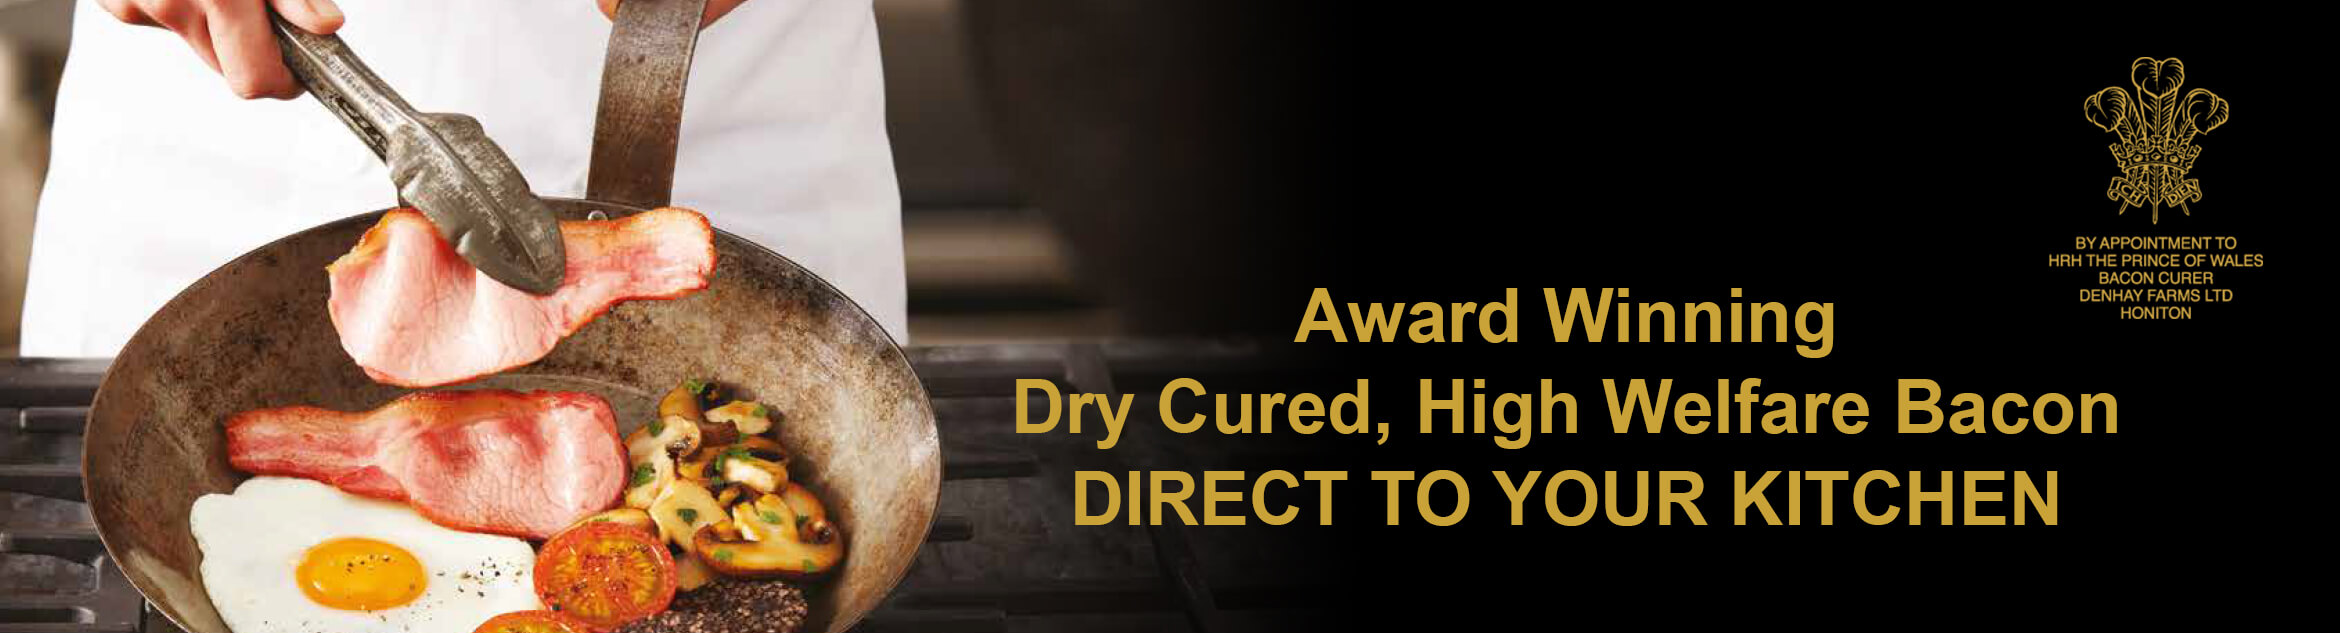 Award Winning Dry Cured